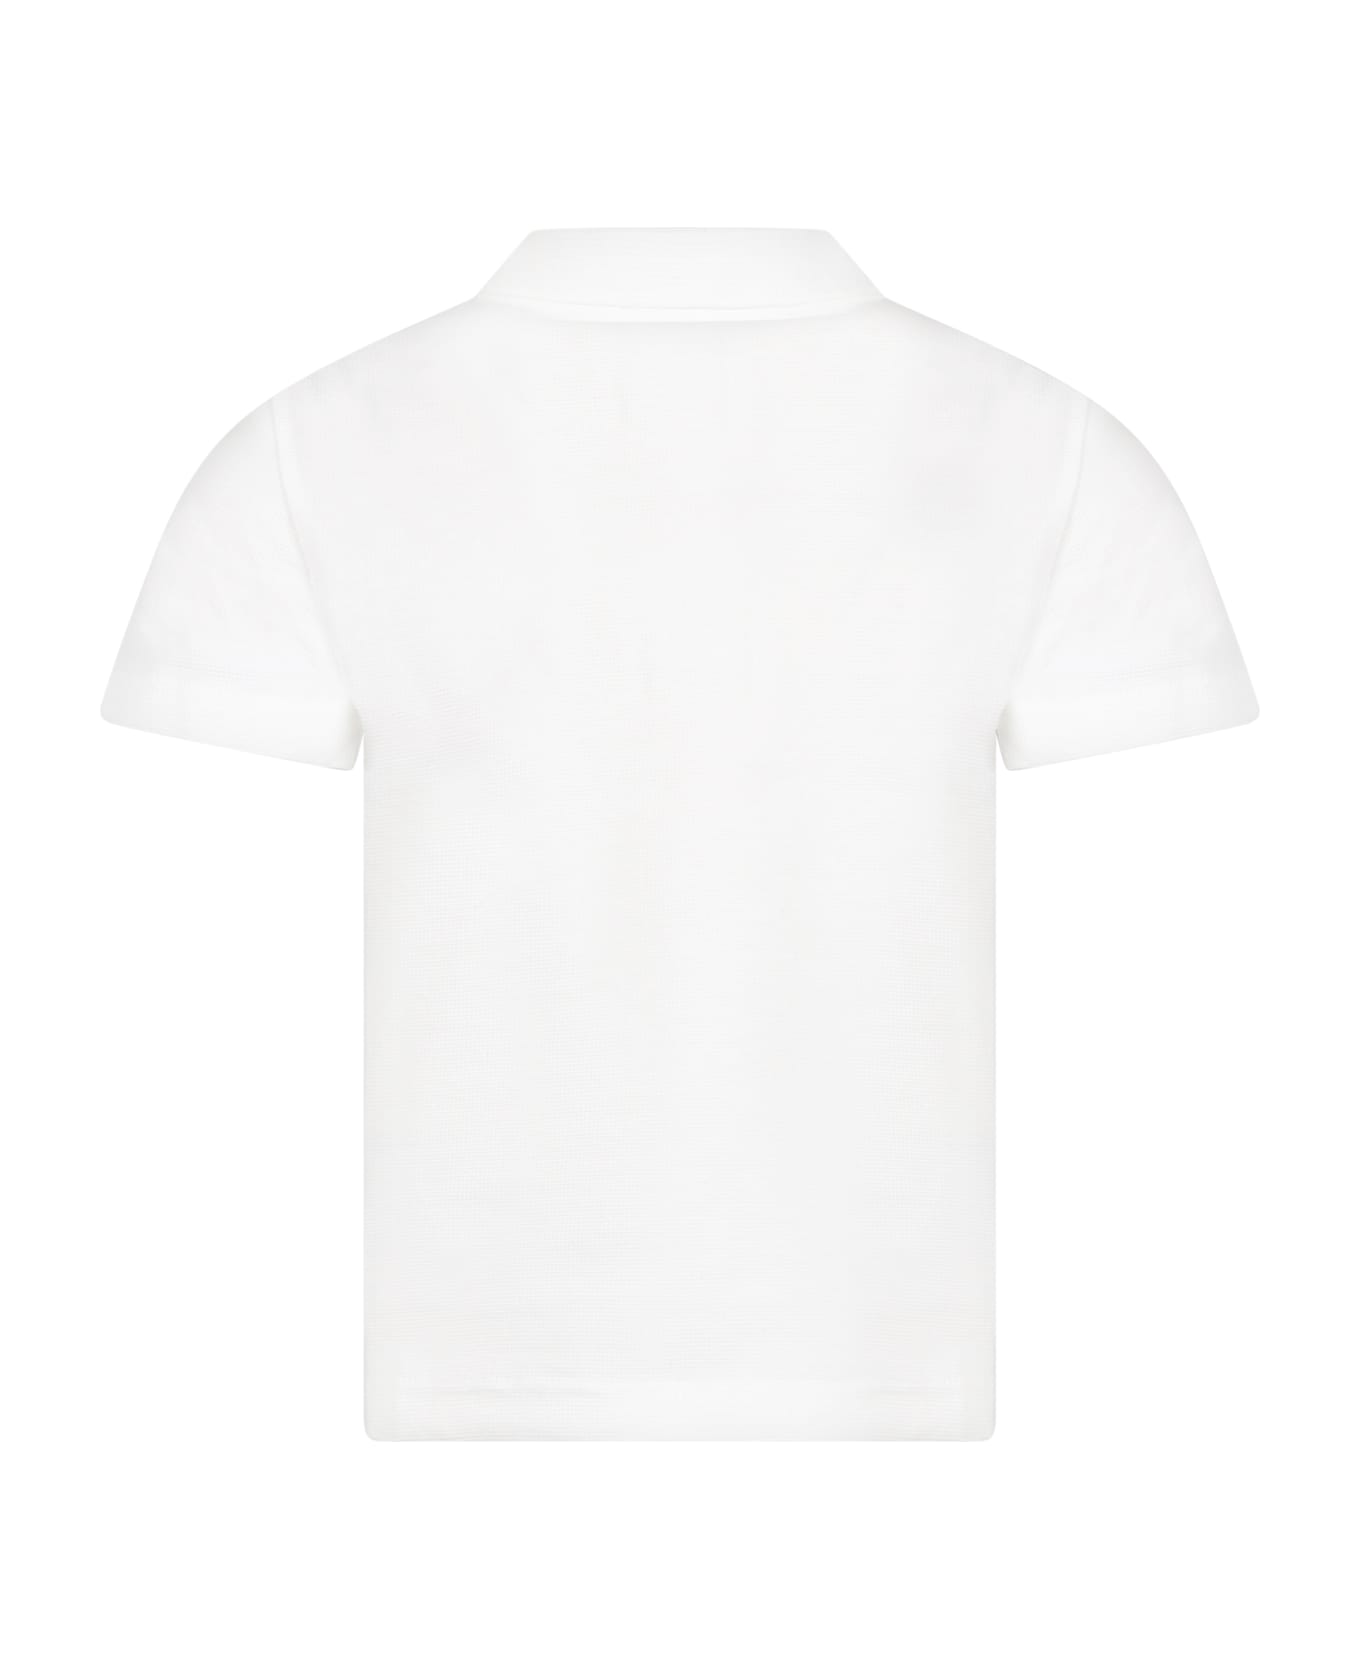 Lacoste White Polo For Boy With Iconic Logo - White